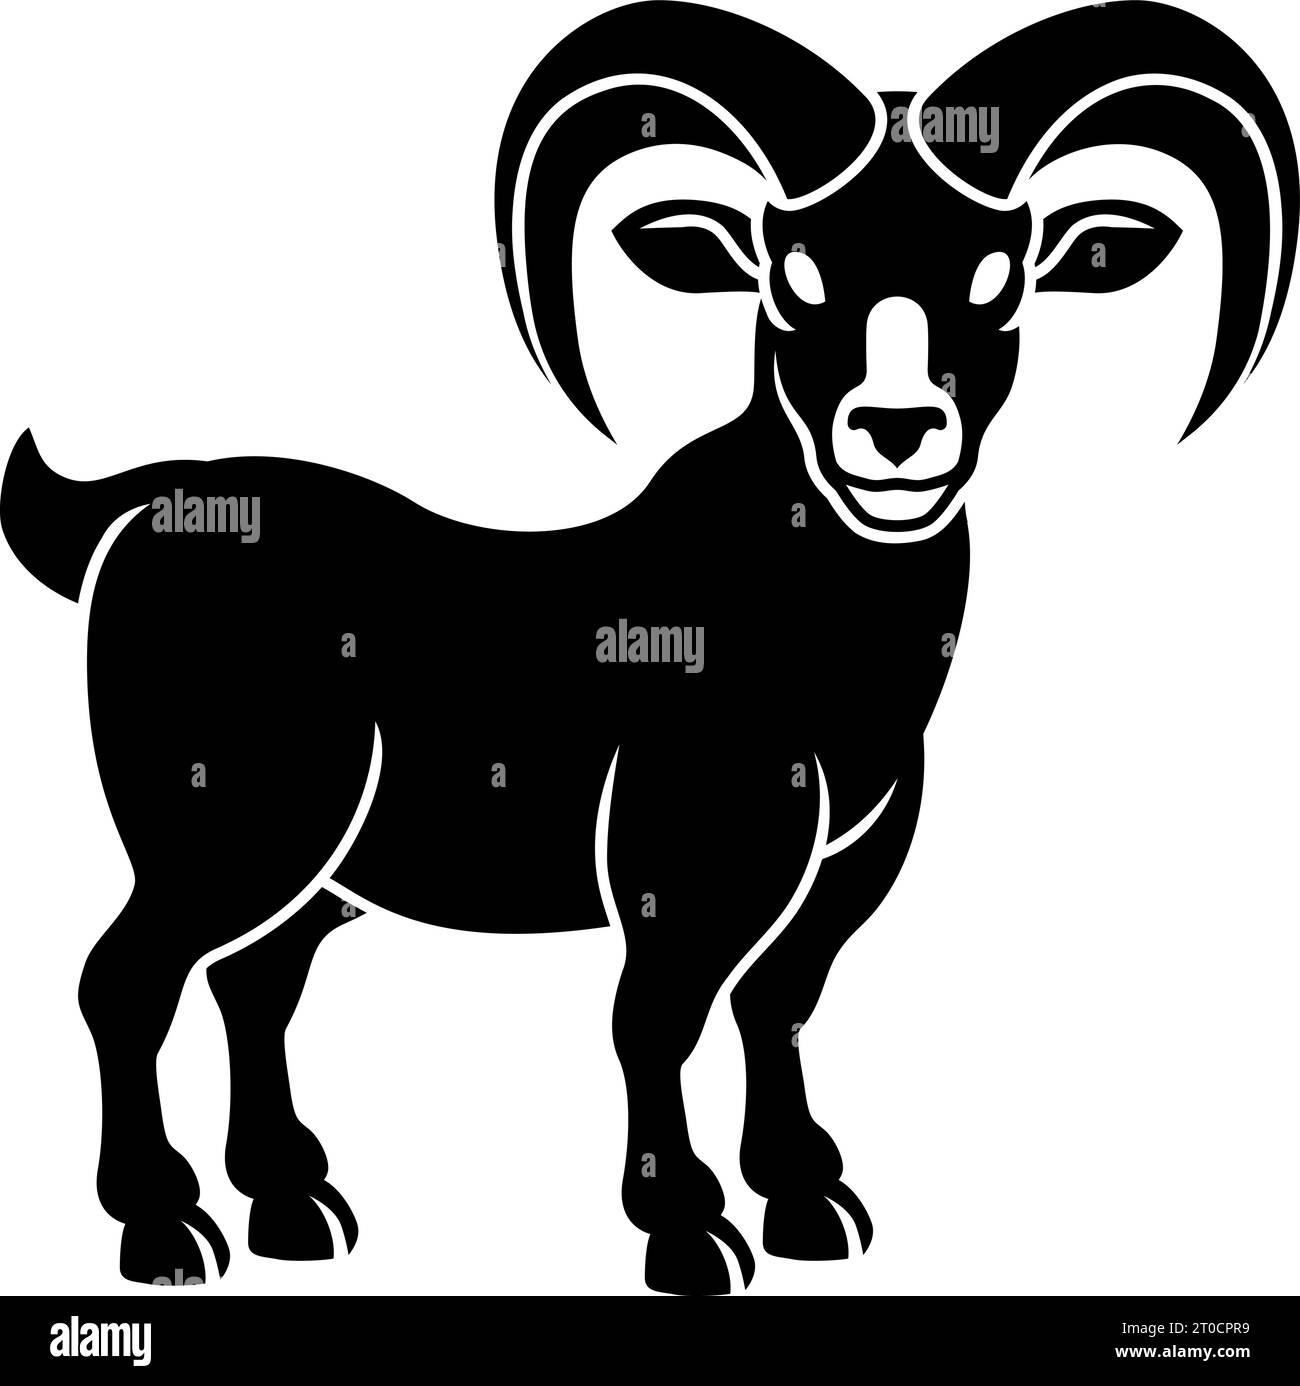 RAM Goat Chinese Zodiac Horoscope Animal Year Sign Illustrazione Vettoriale